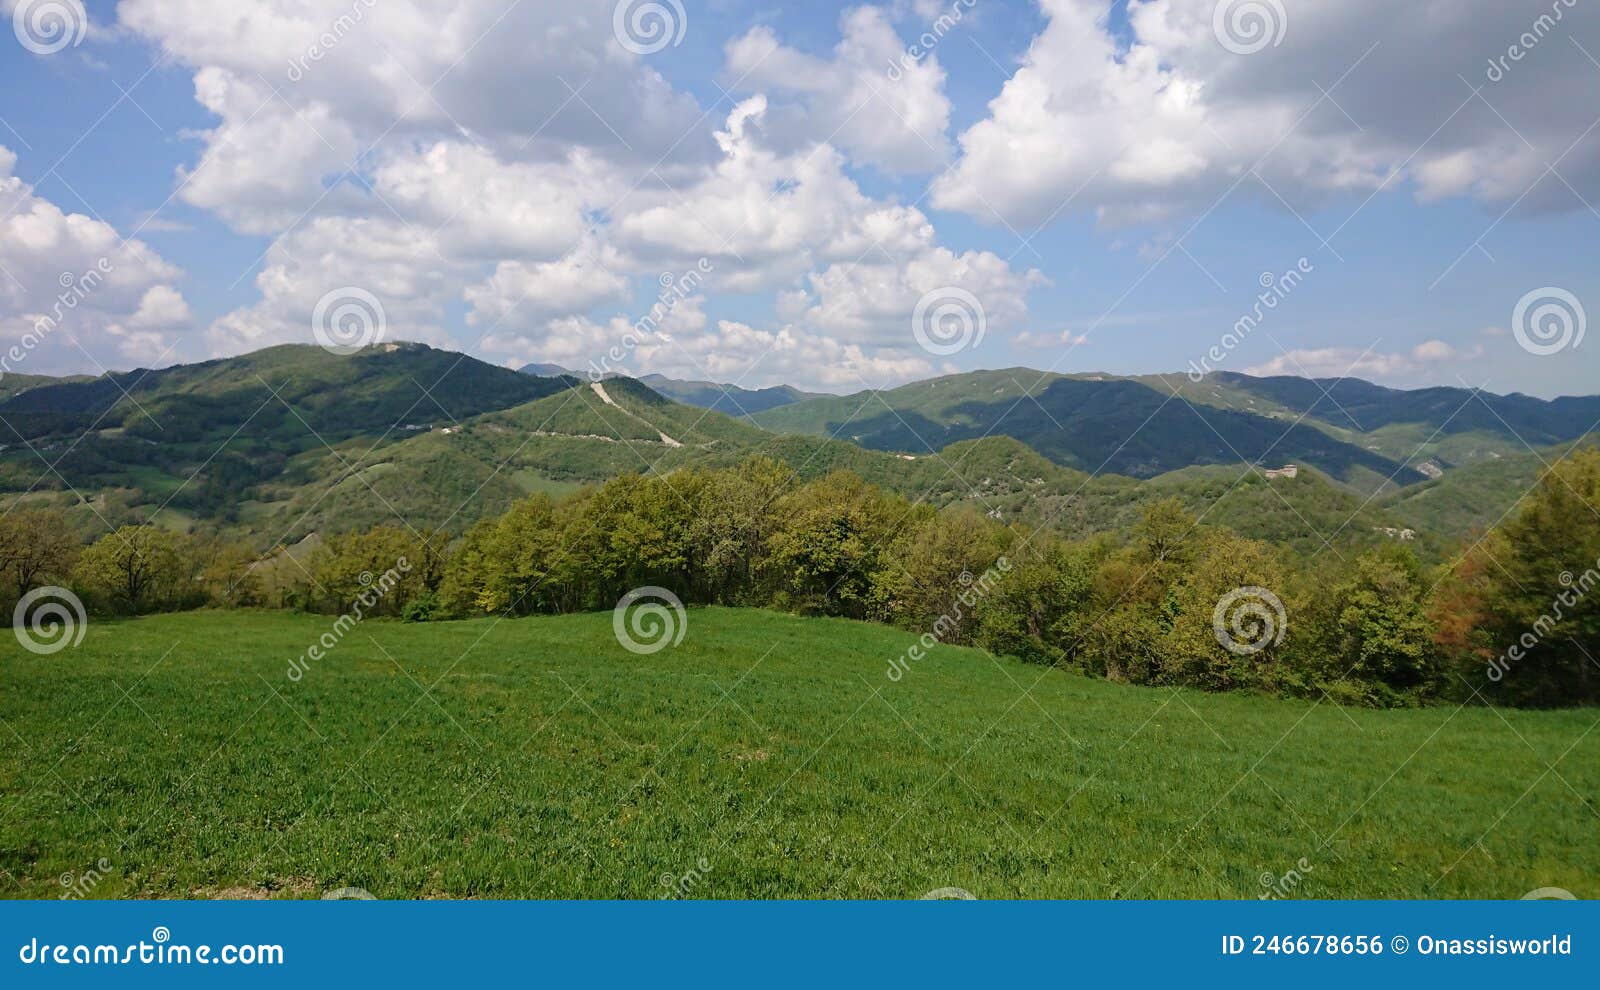 authentic unedited photo of italians tuscany region